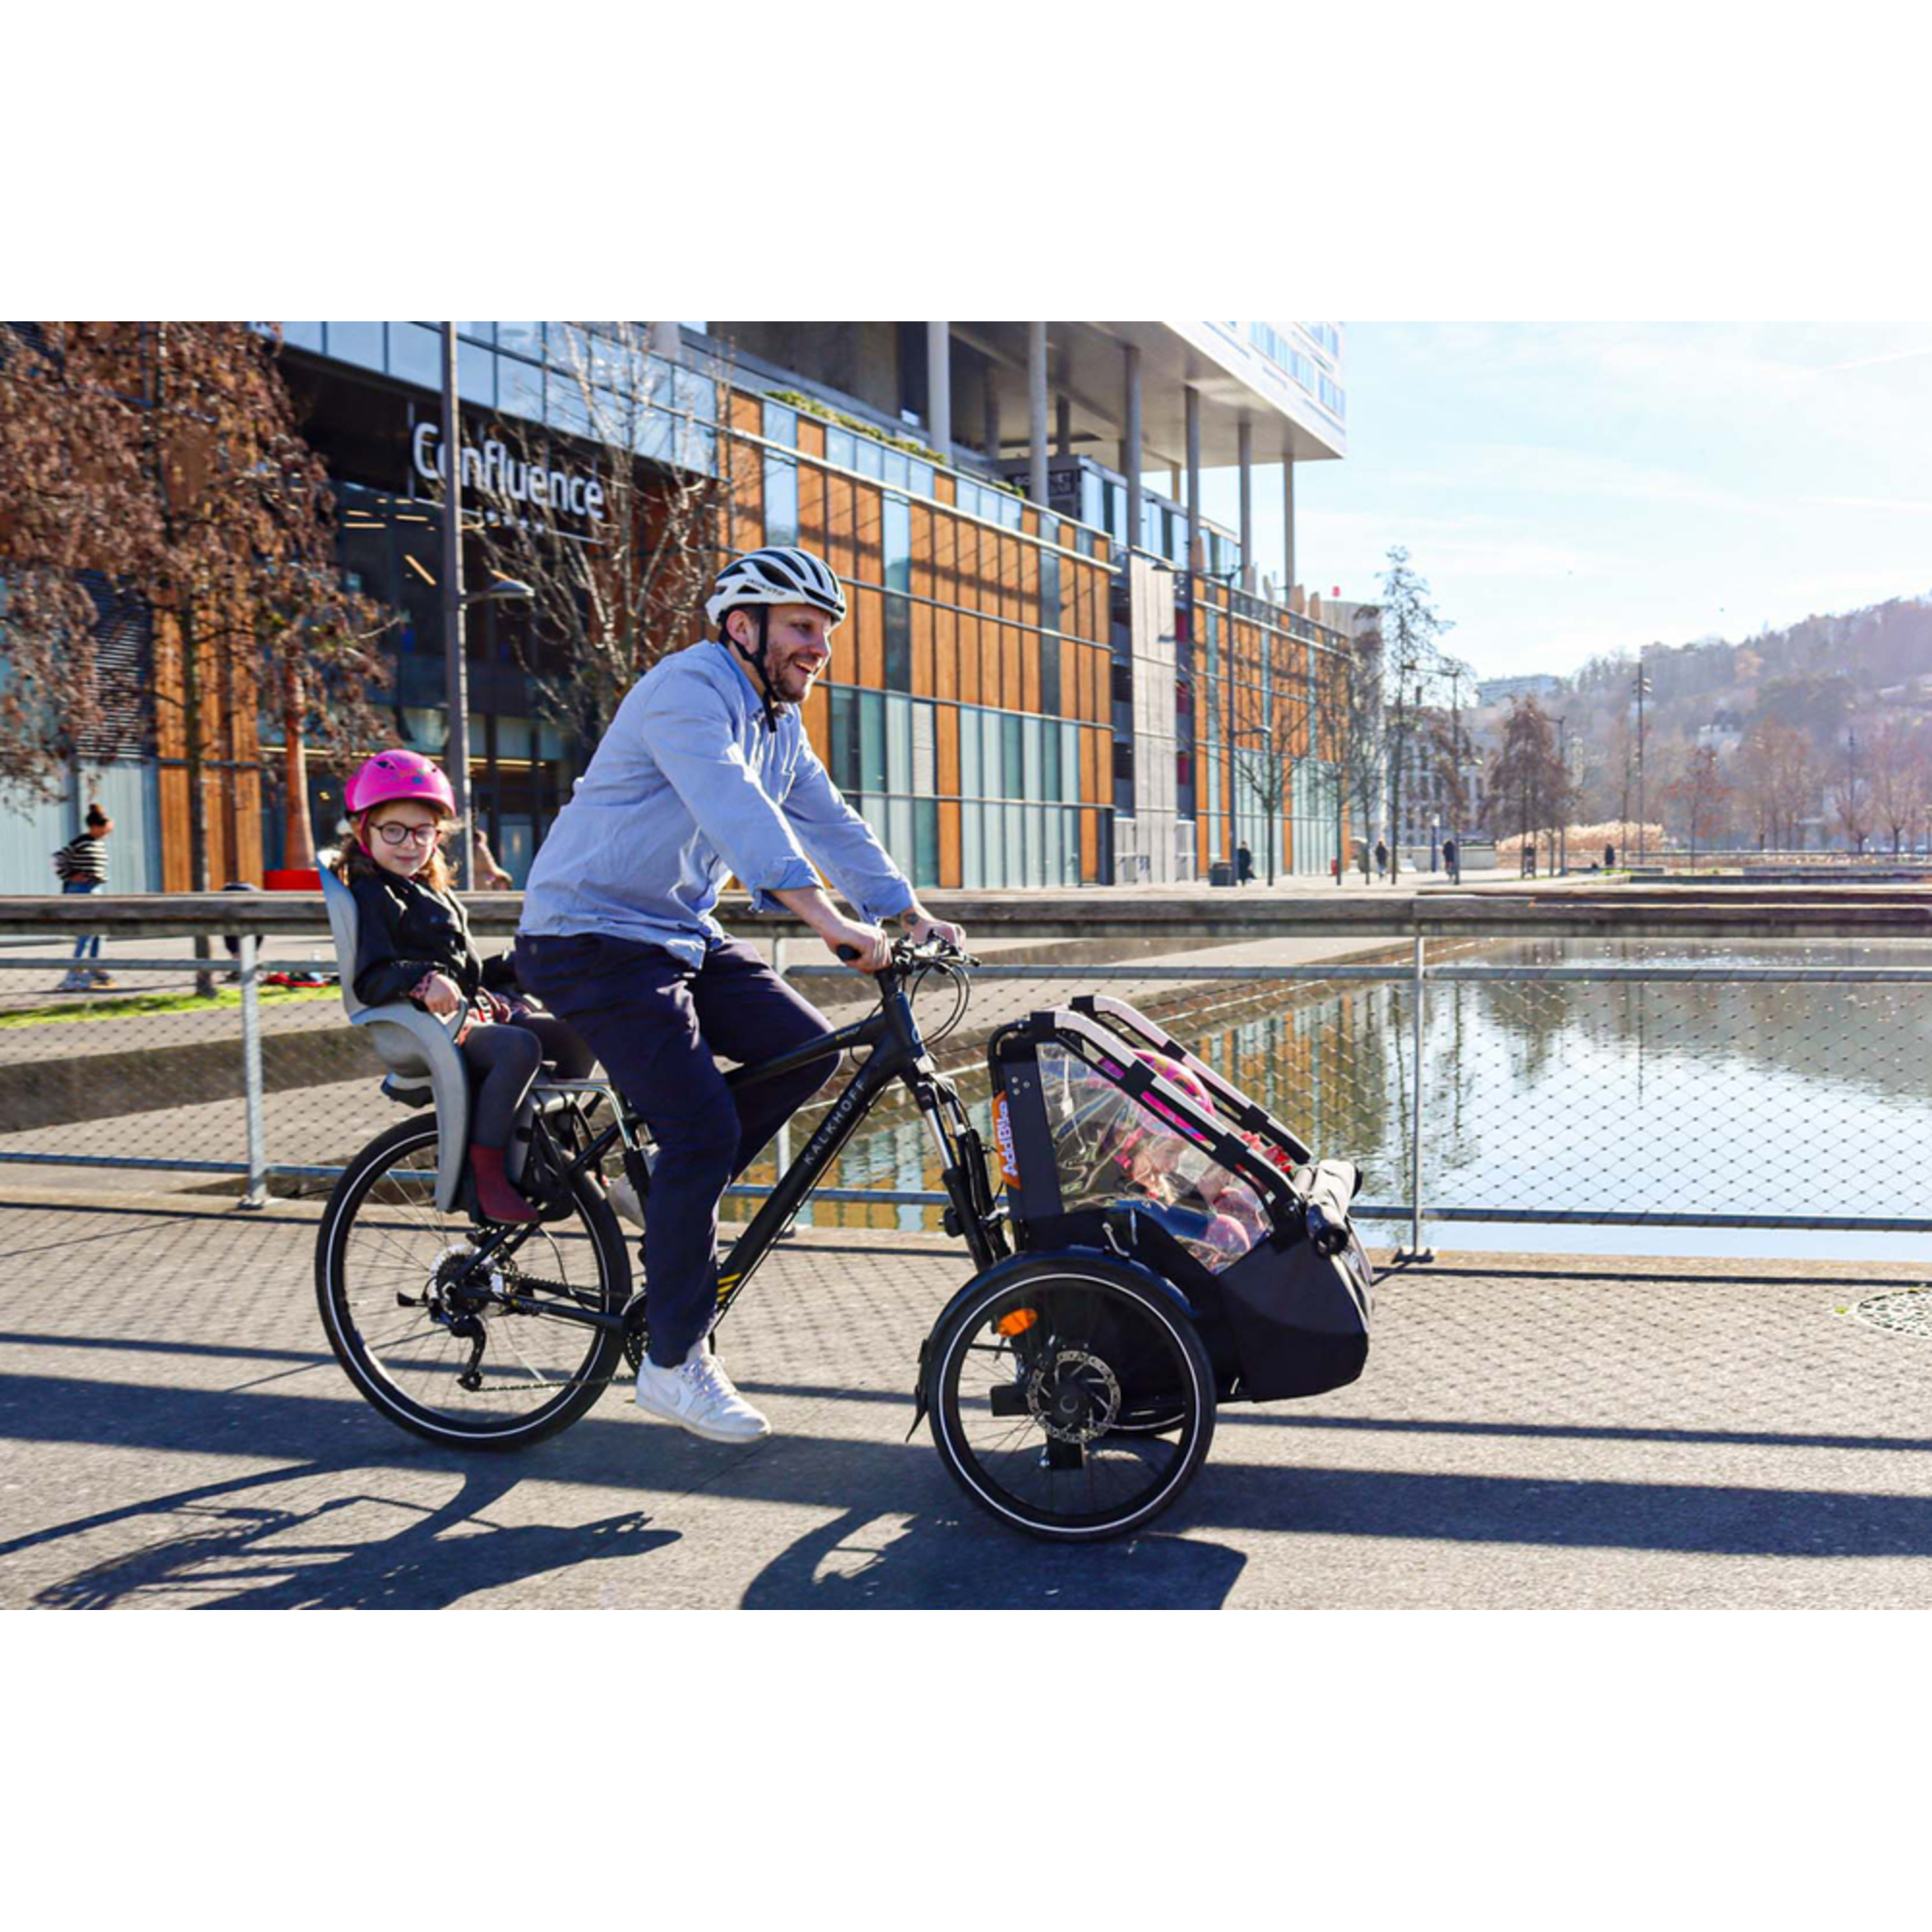 Kit Delantero Addbike Transporte Infantil